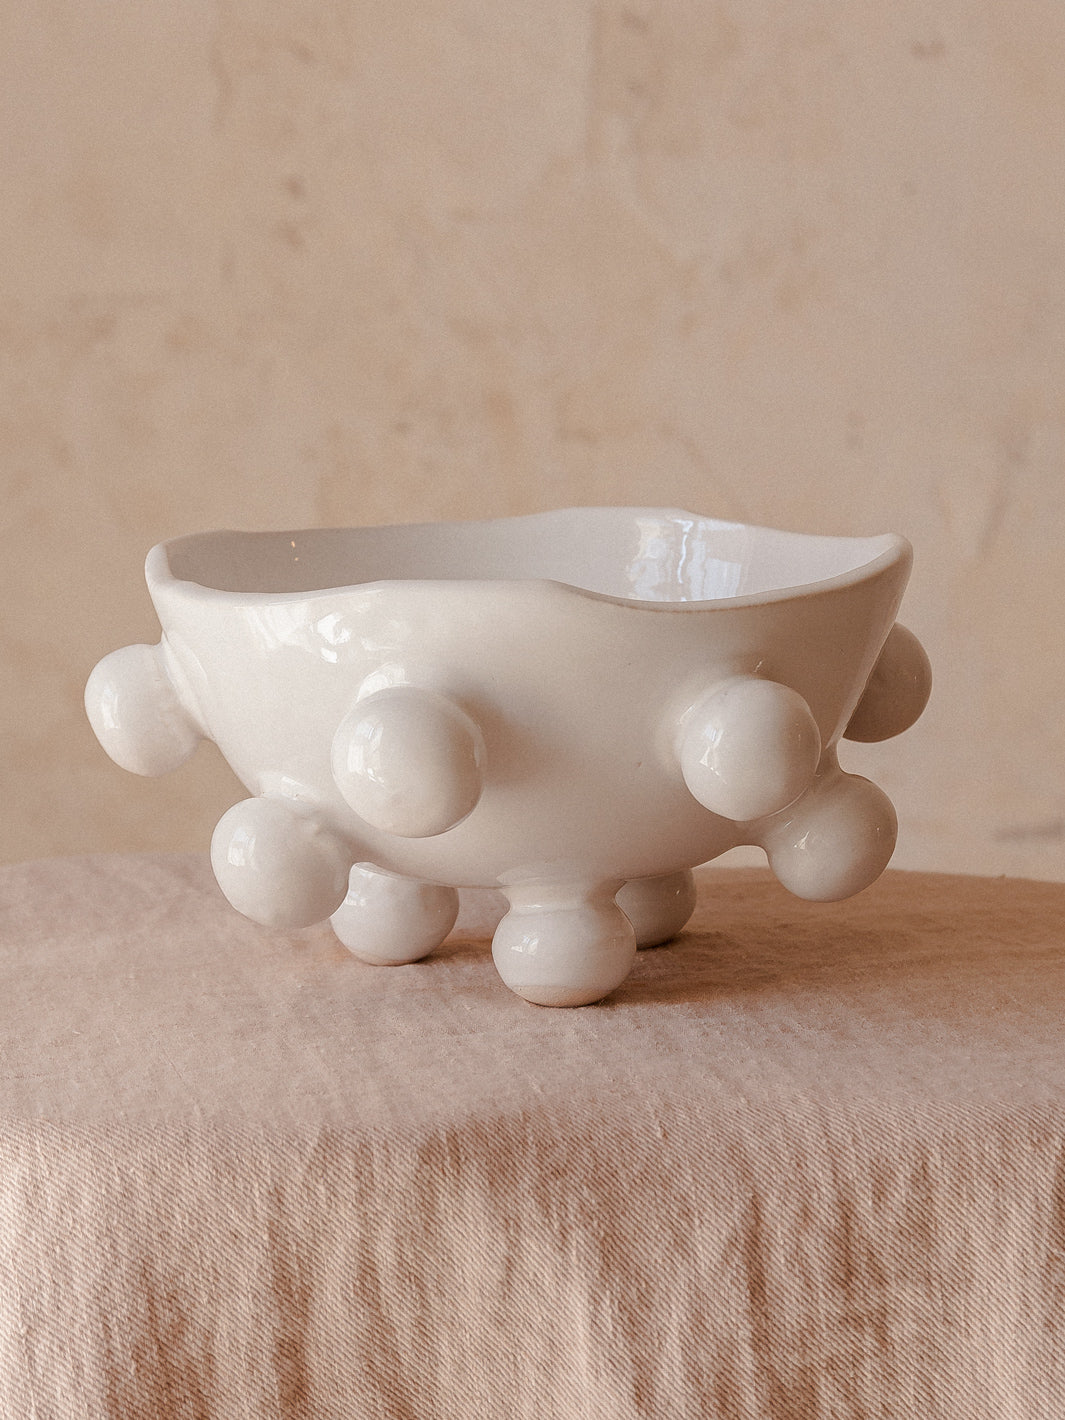 Handmade ceramic "Bubble" fruit bowl